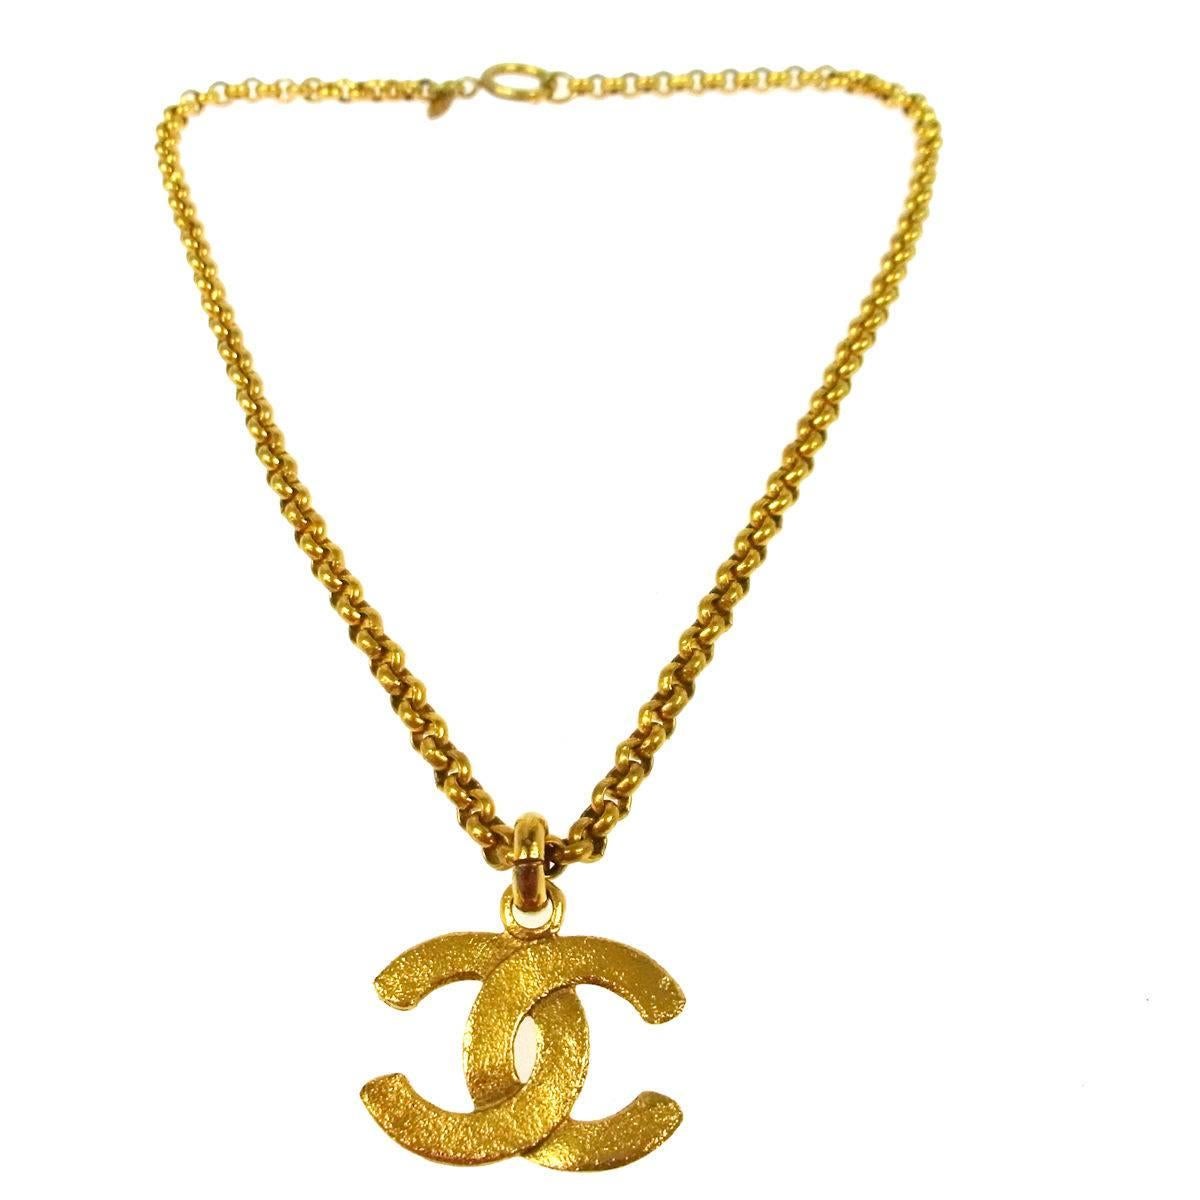 Chanel Vintage GOLD Large Charm Chain Link Evening Pendant Necklace 